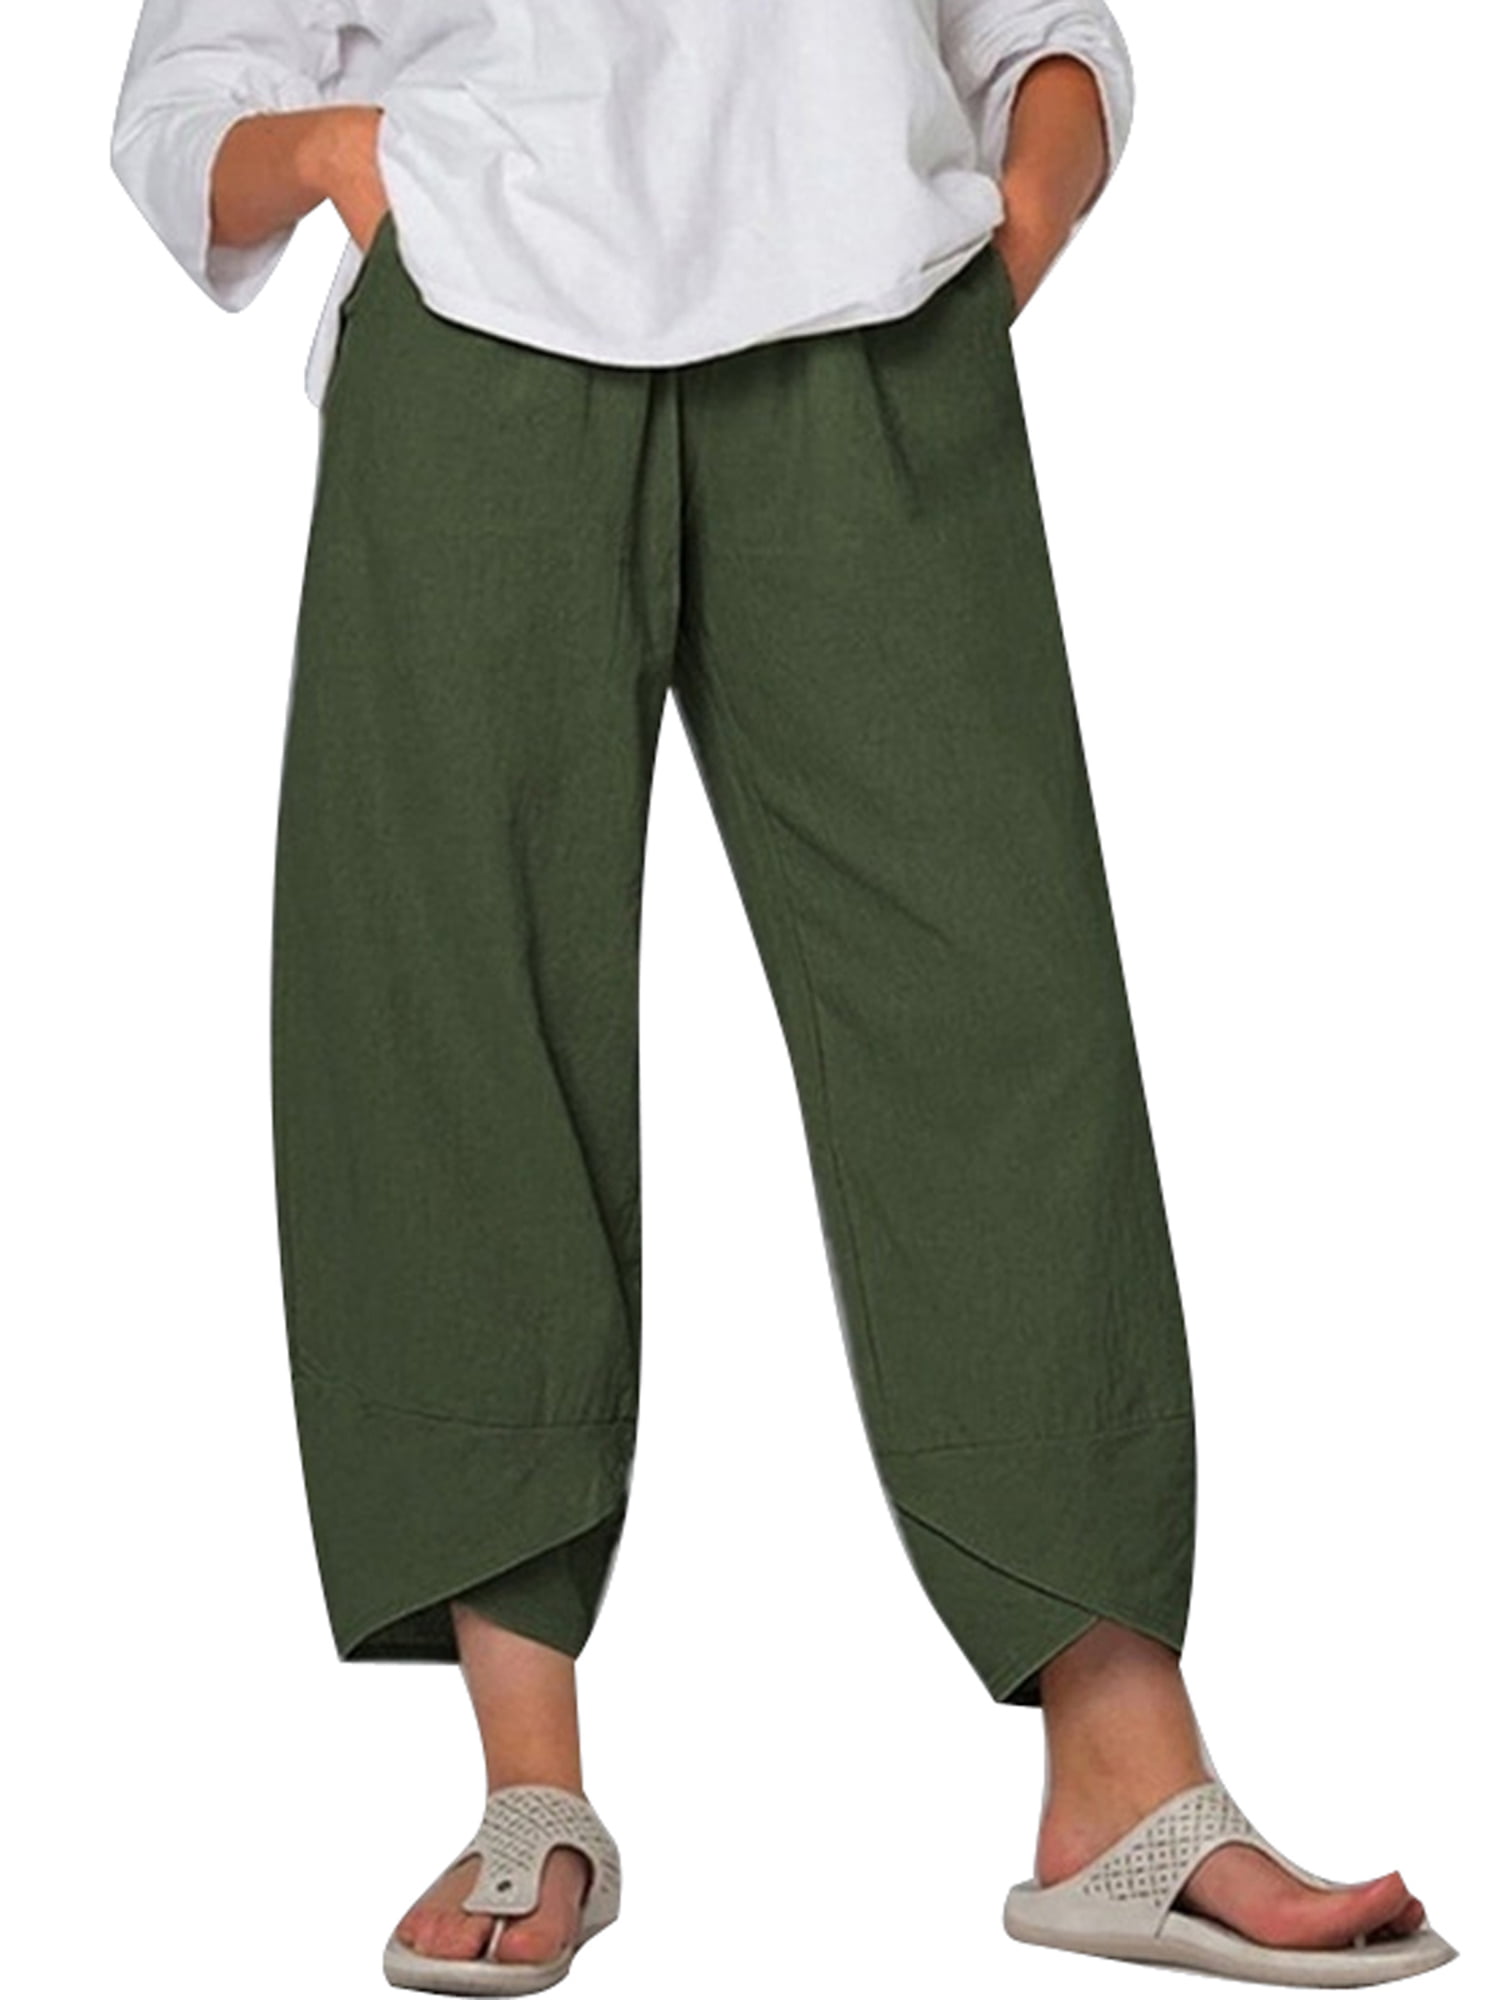 HYSGM Women Plus Size Cotton Linen Wide Leg Pants Casual Solid Folds Ruffled Loose Pocket Pants 